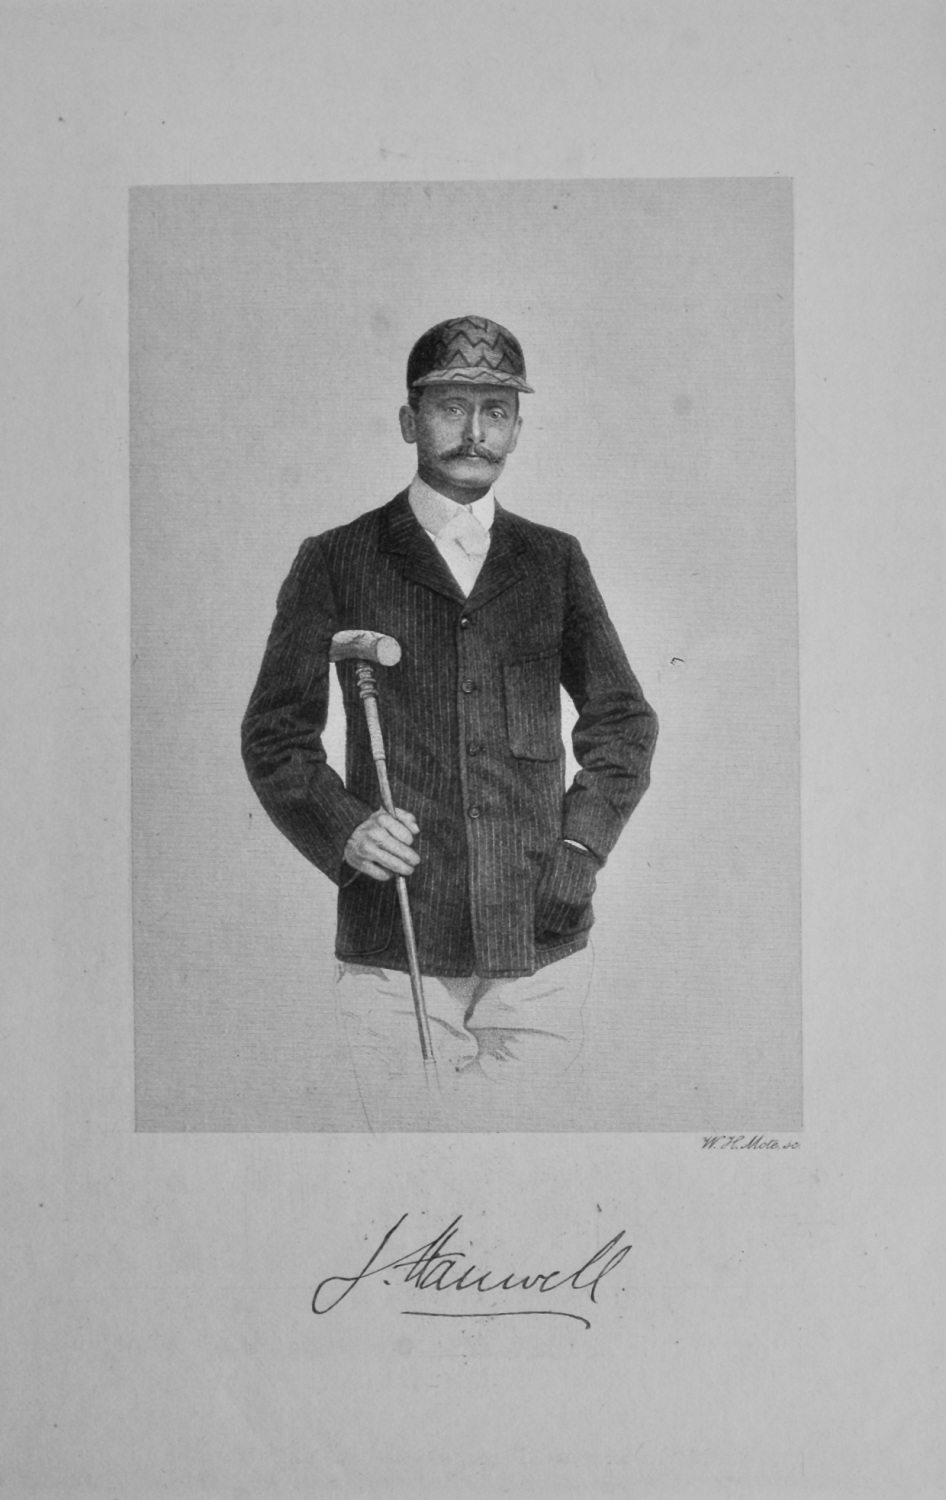 Major Joseph Hanwell. (Polo player).